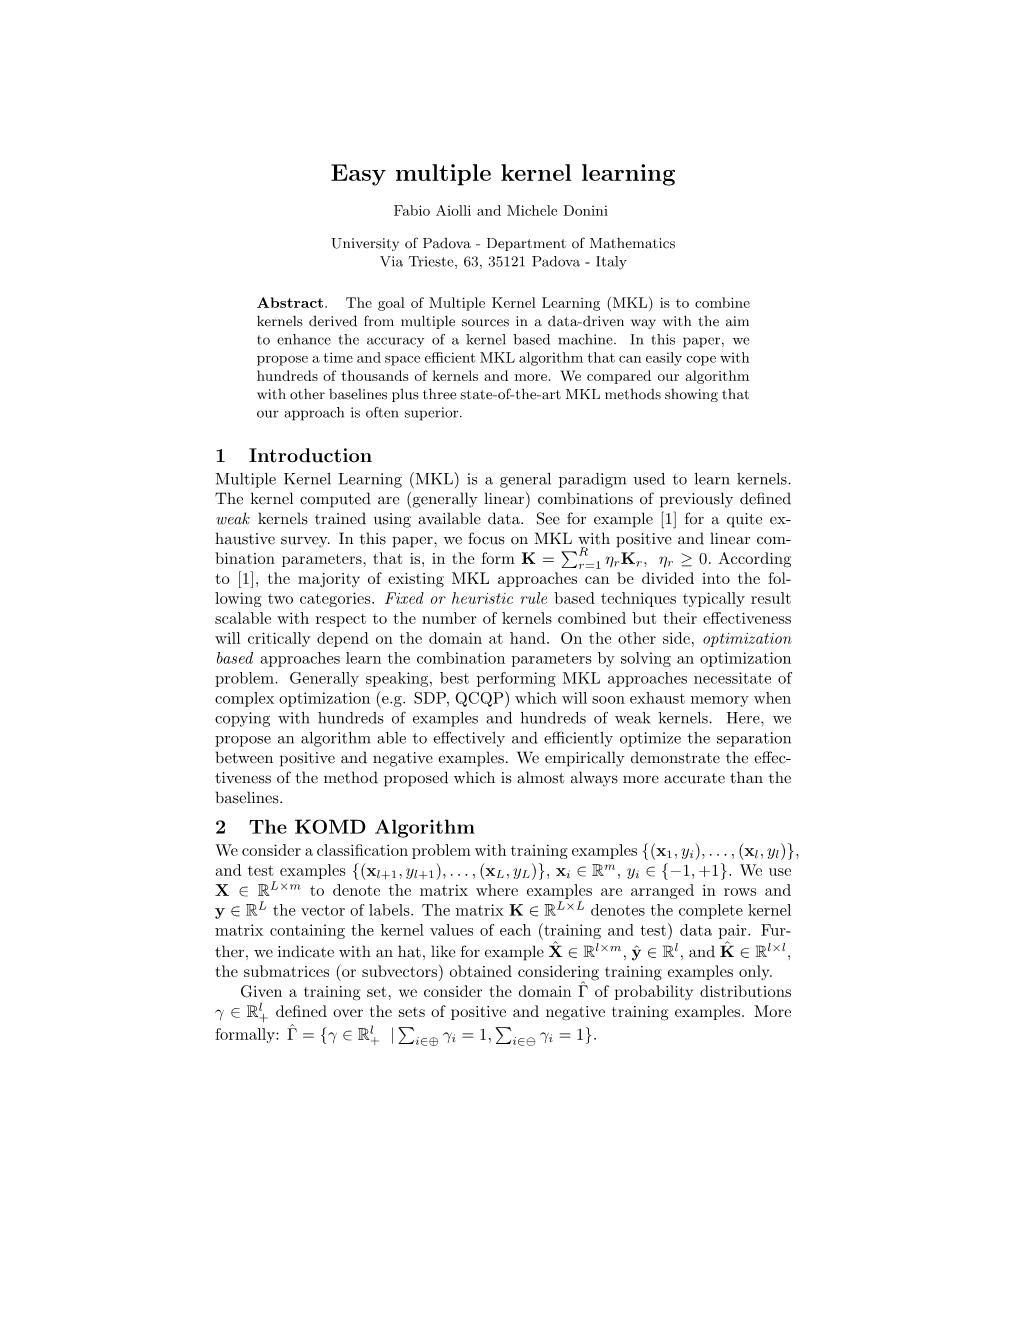 Easy Multiple Kernel Learning